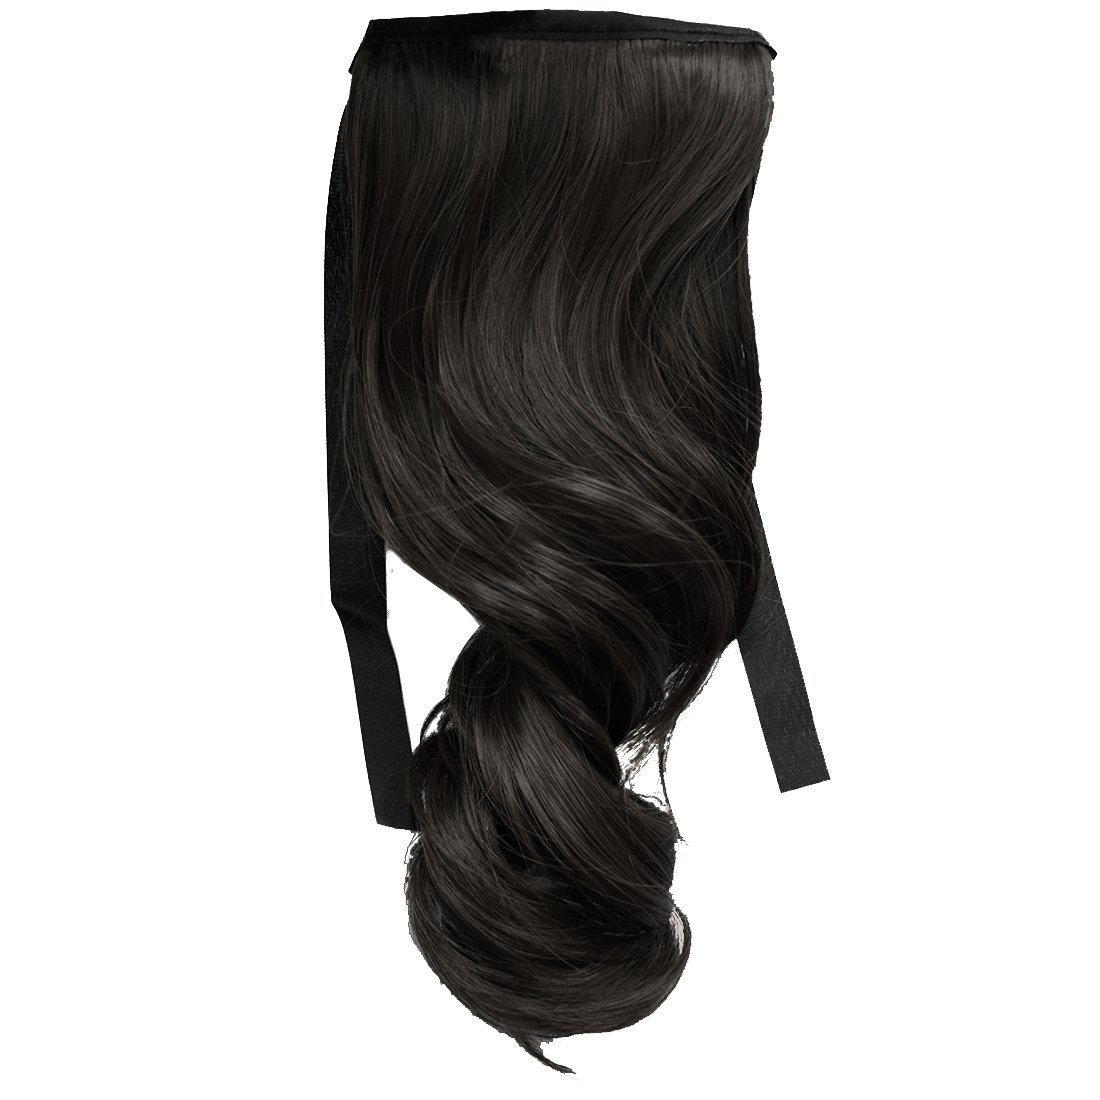  ponytail wig wig ponytail woman long ponytail wig car Lee hair 25cm natural black 